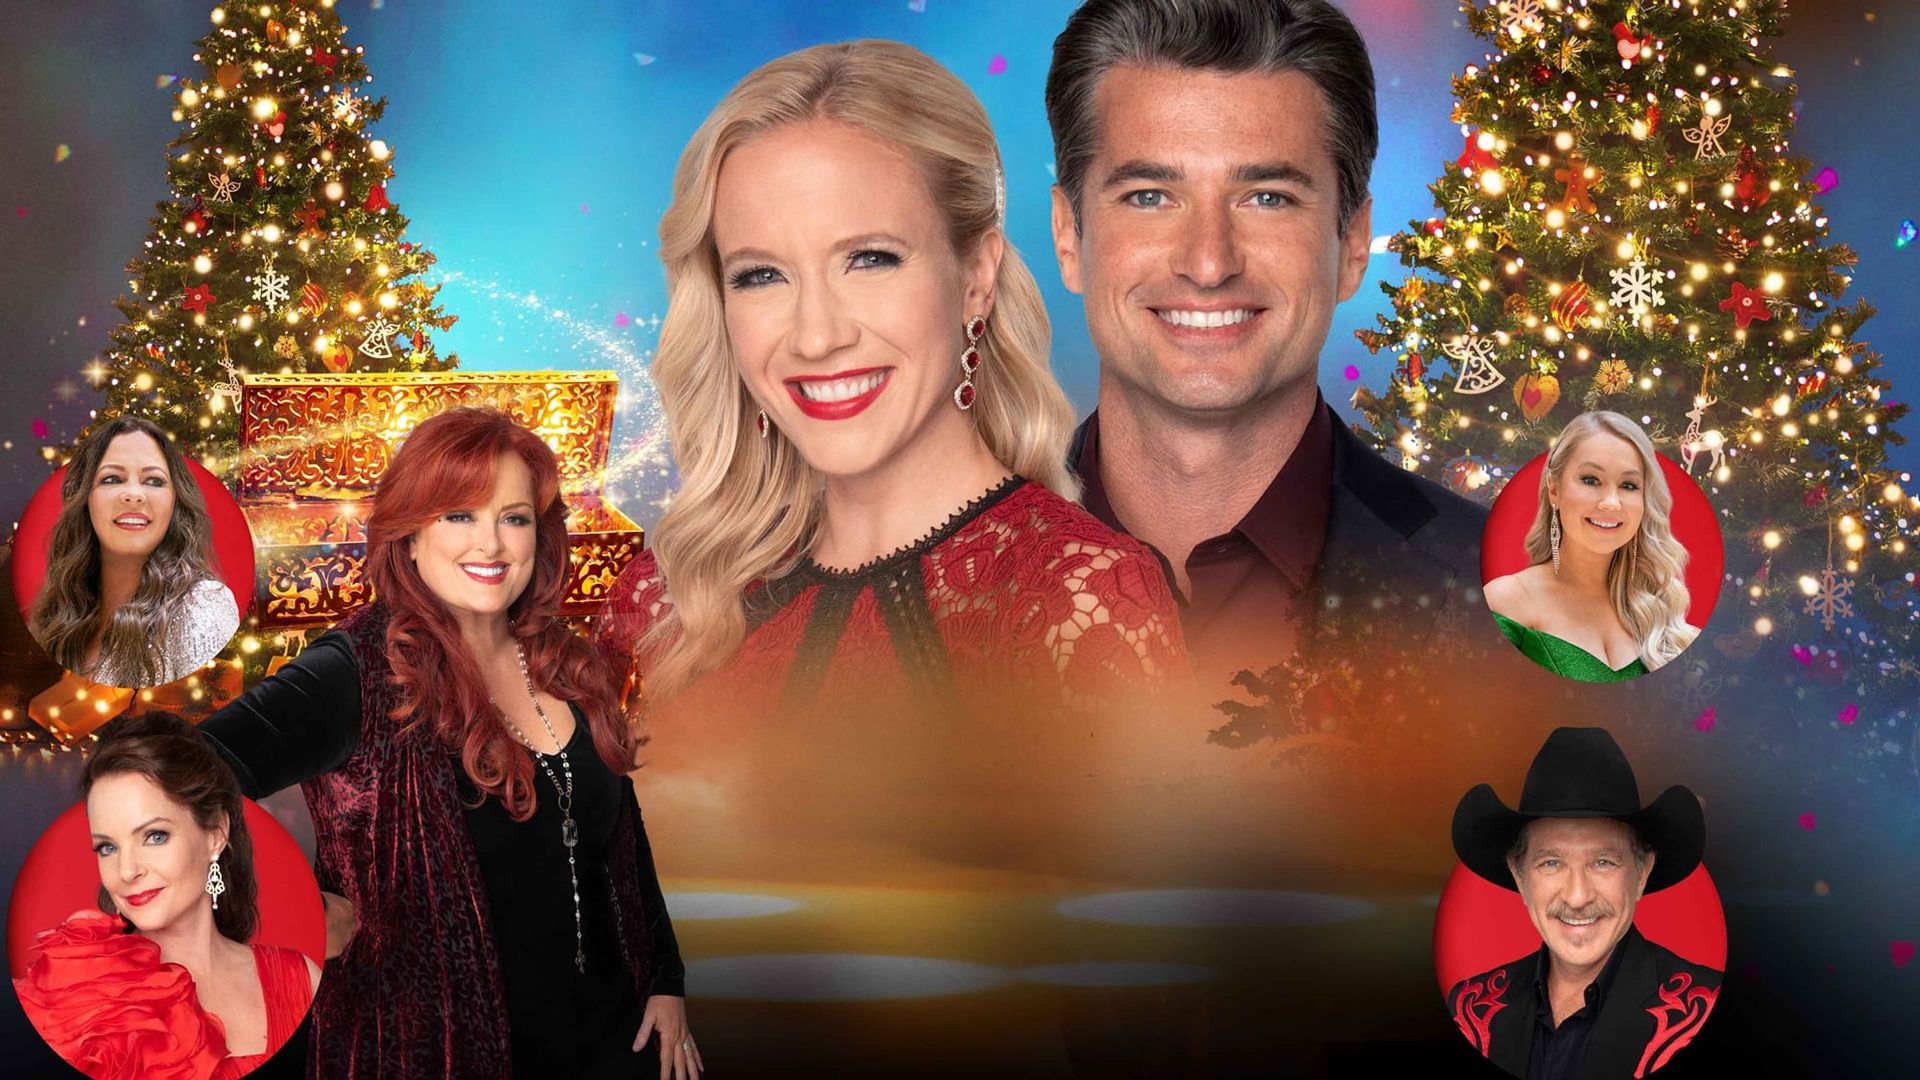 A Nashville Christmas Carol background